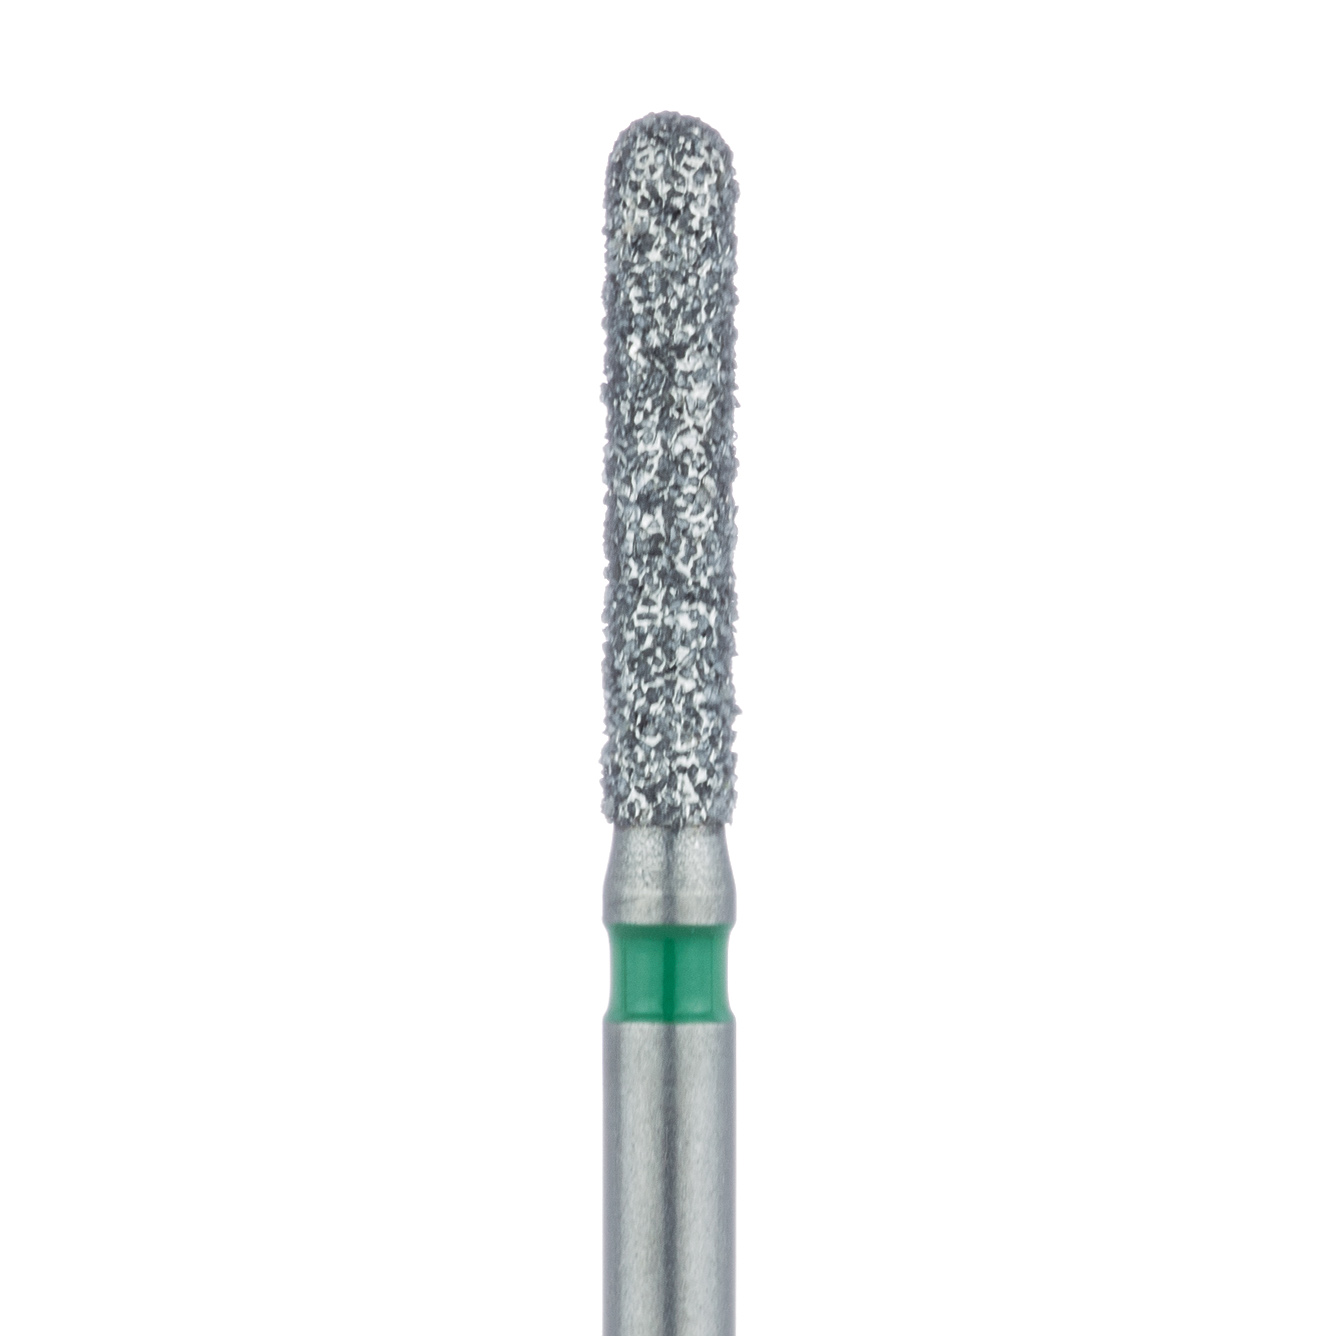 881G-016-FG Round End Cylinder Diamond Bur, 1.6mm Ø, Coarse, FG